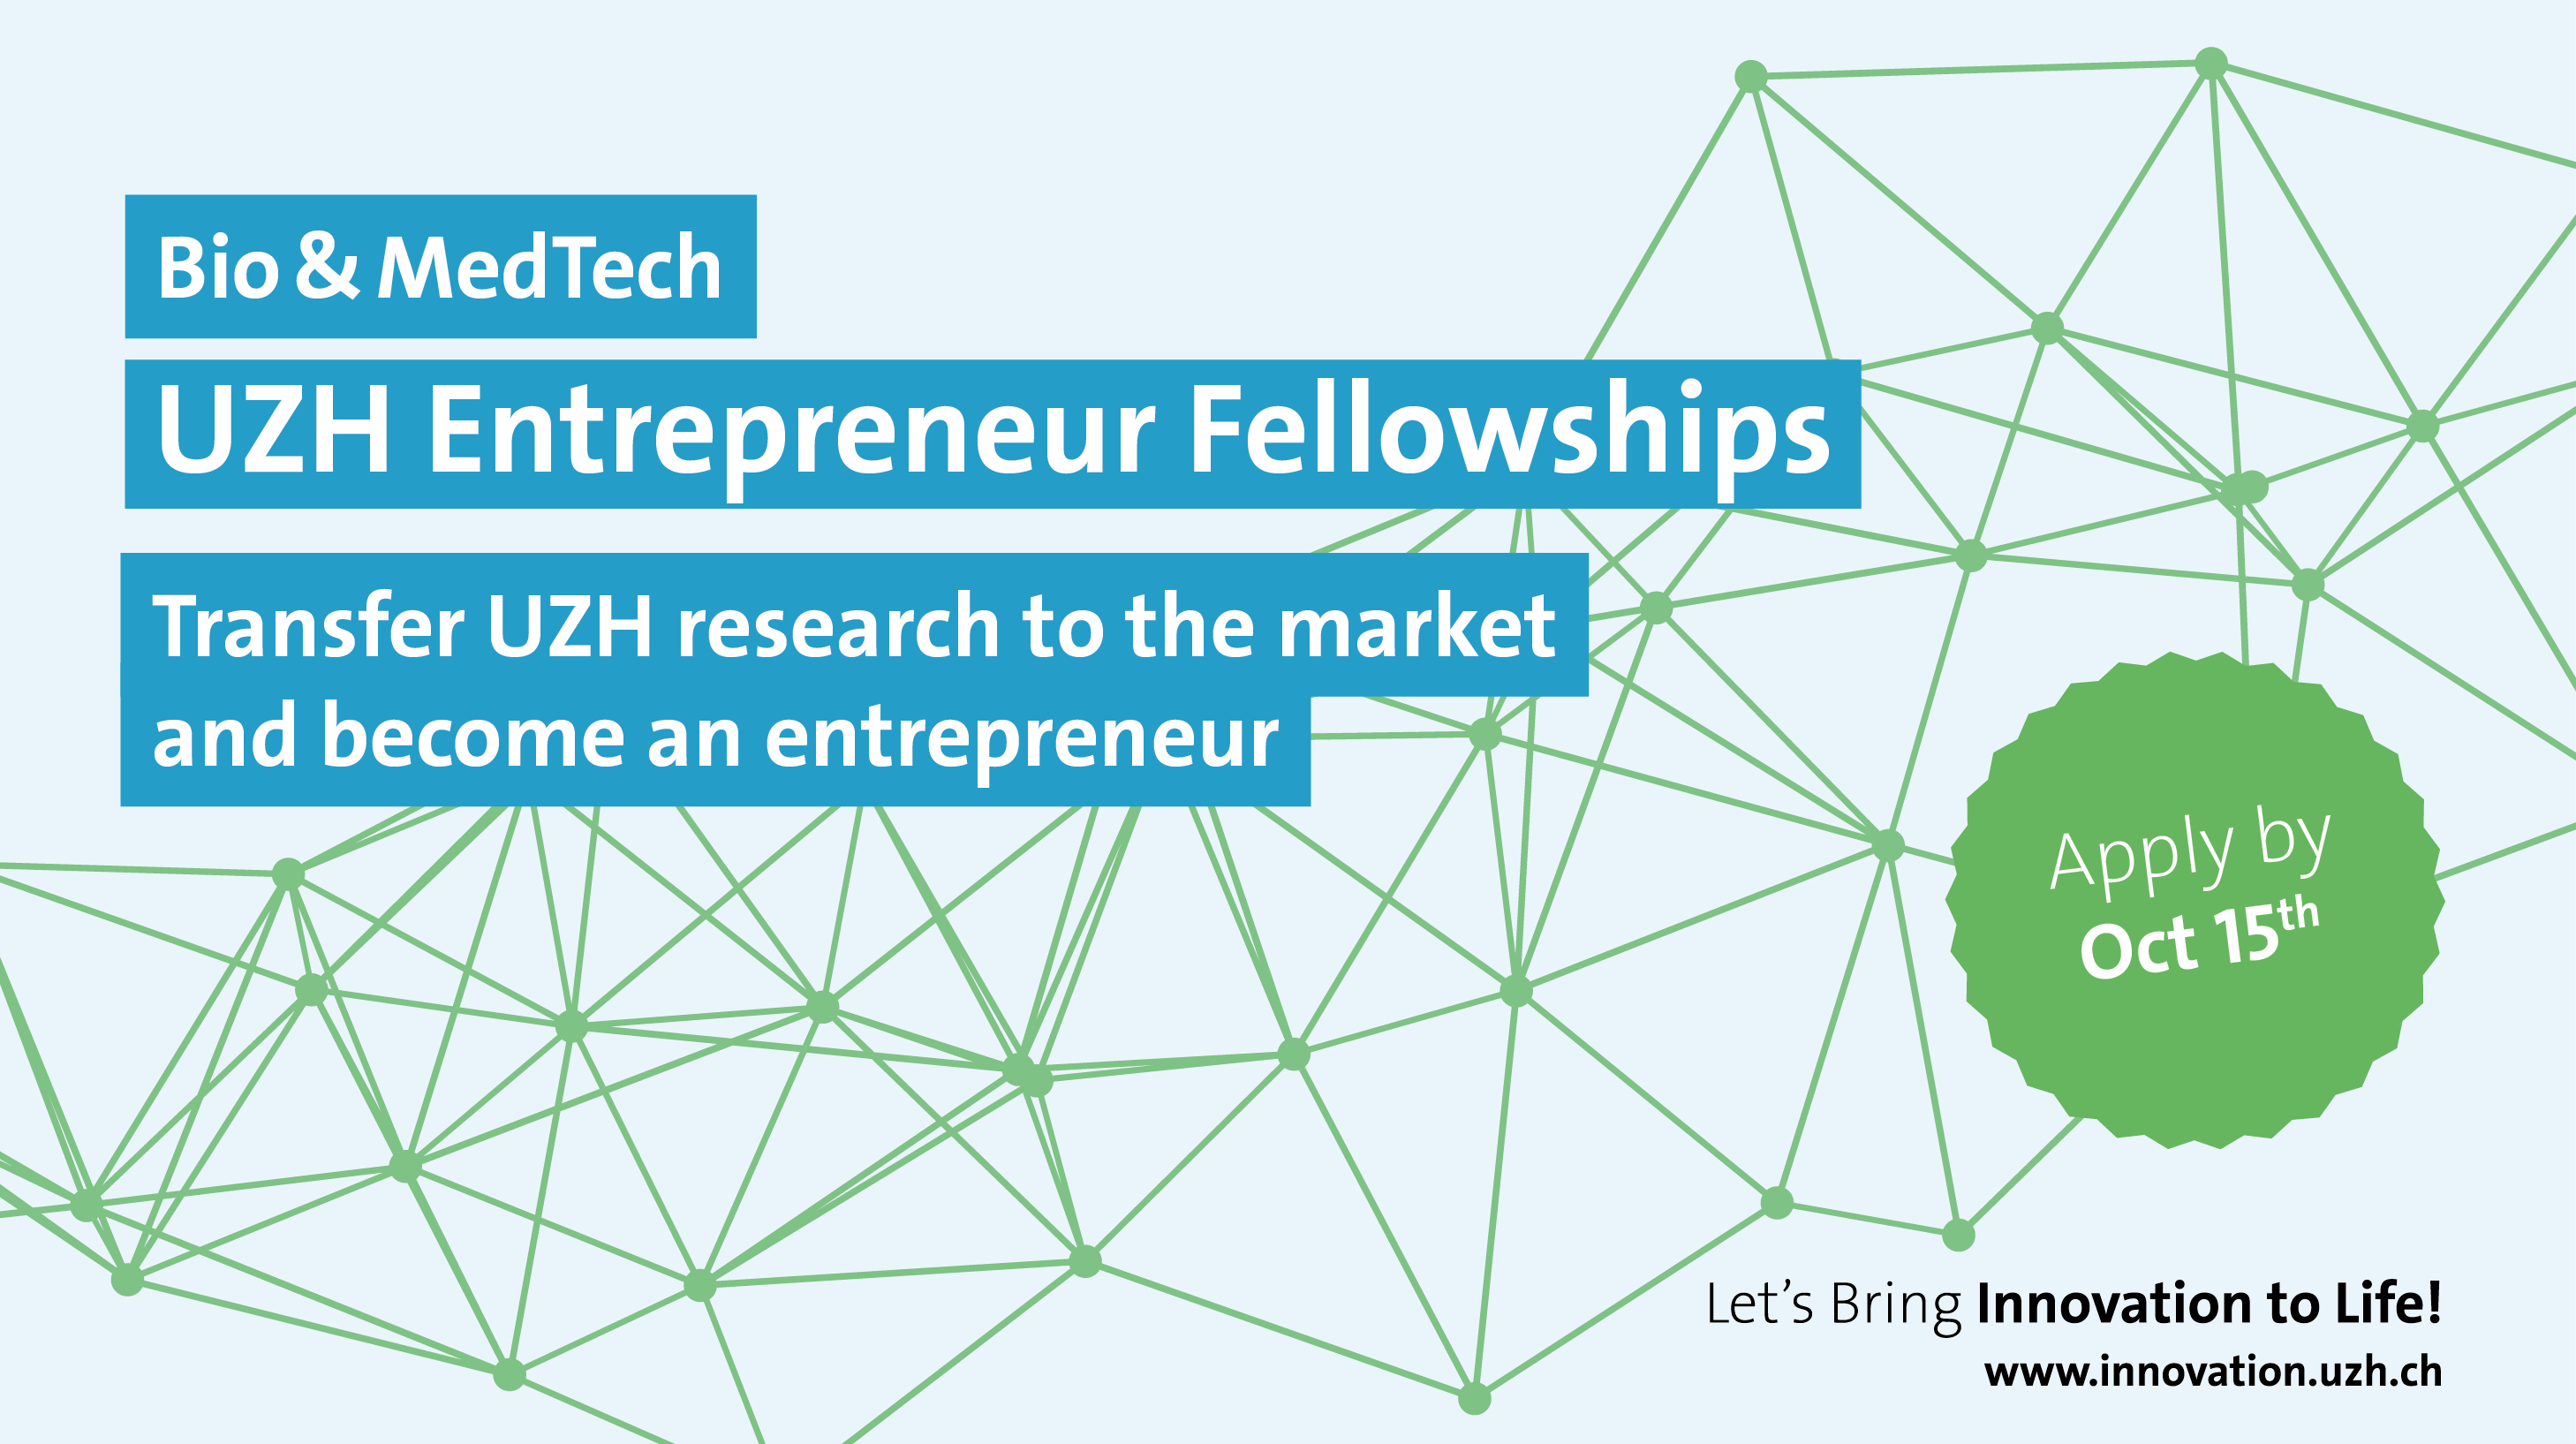 UZH Entrepreneur Fellowship Call Deadline